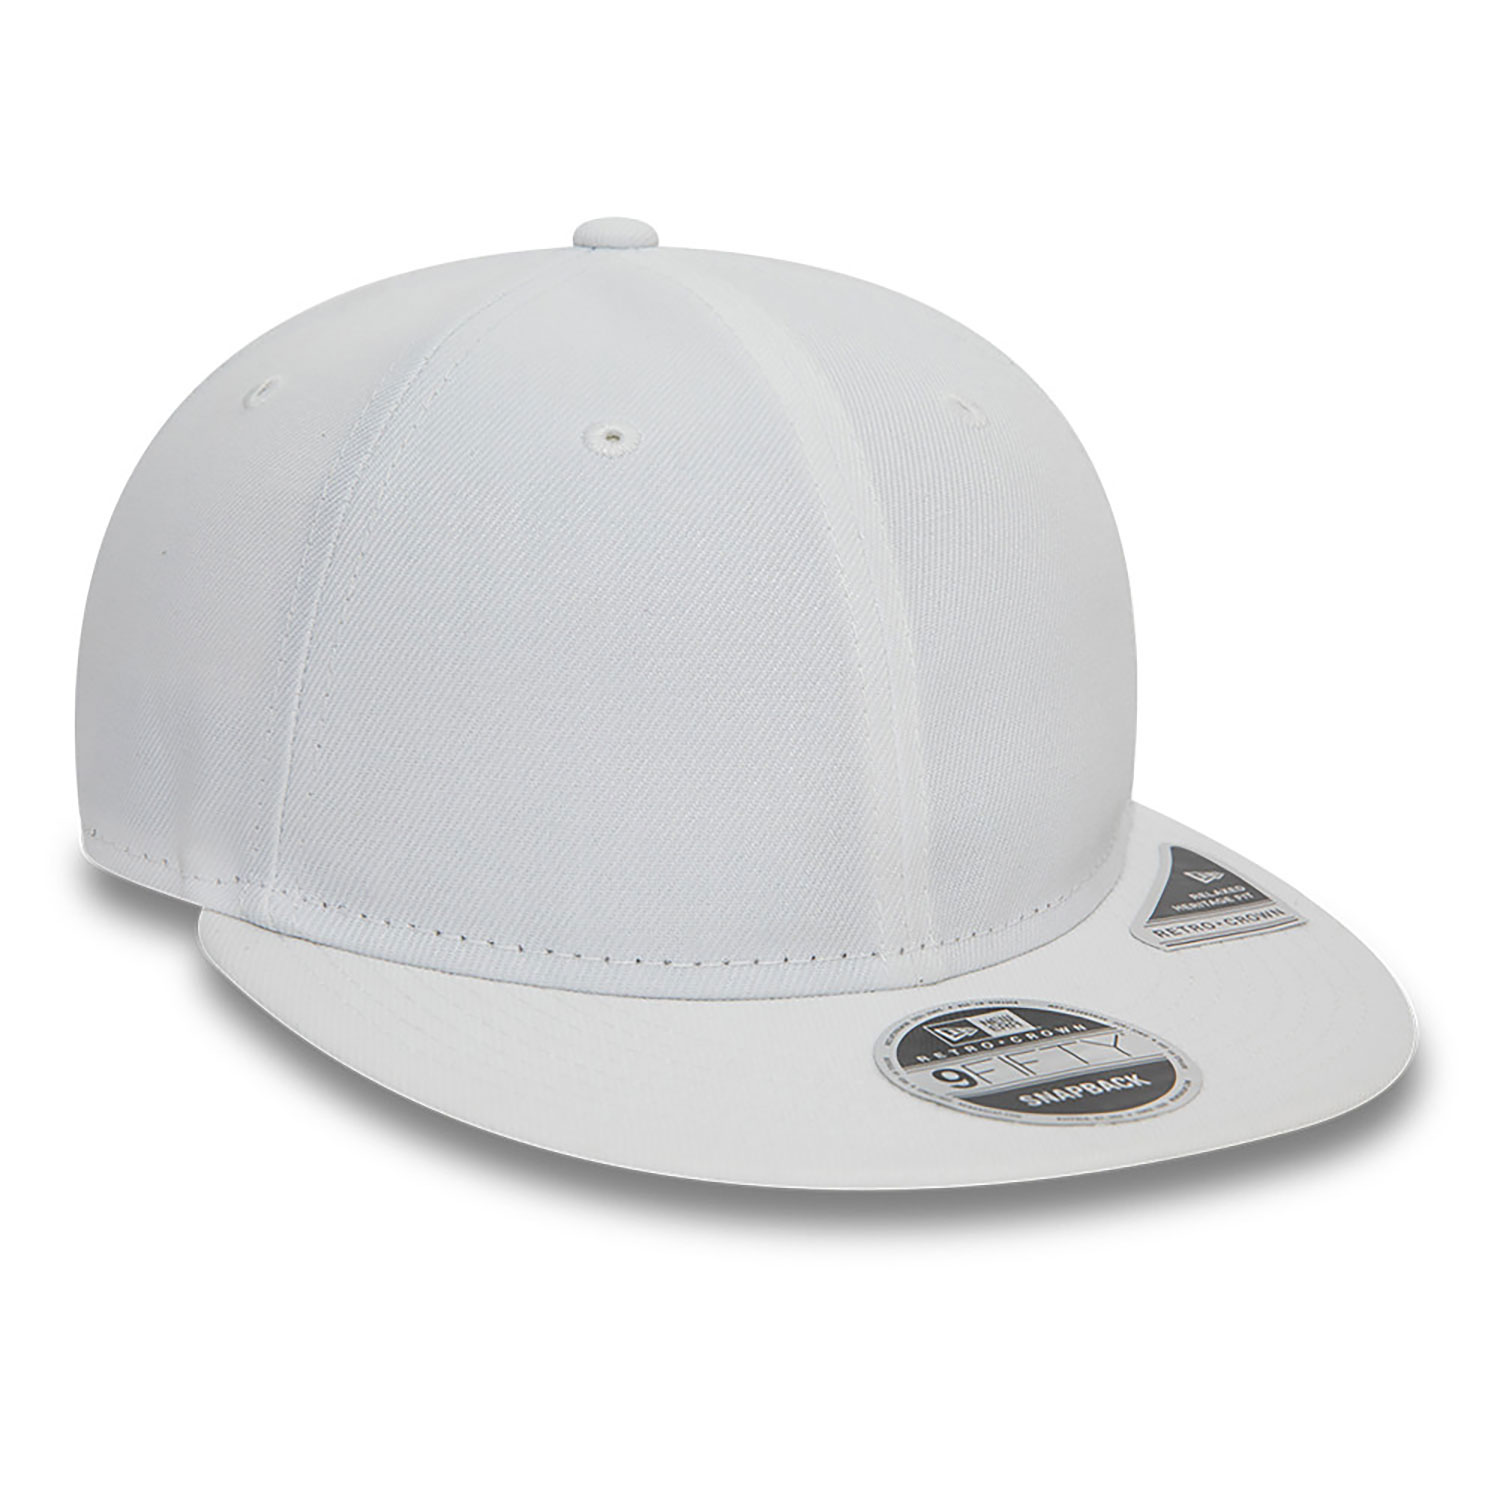 New Era White Retro Crown 9FIFTY Snapback Cap